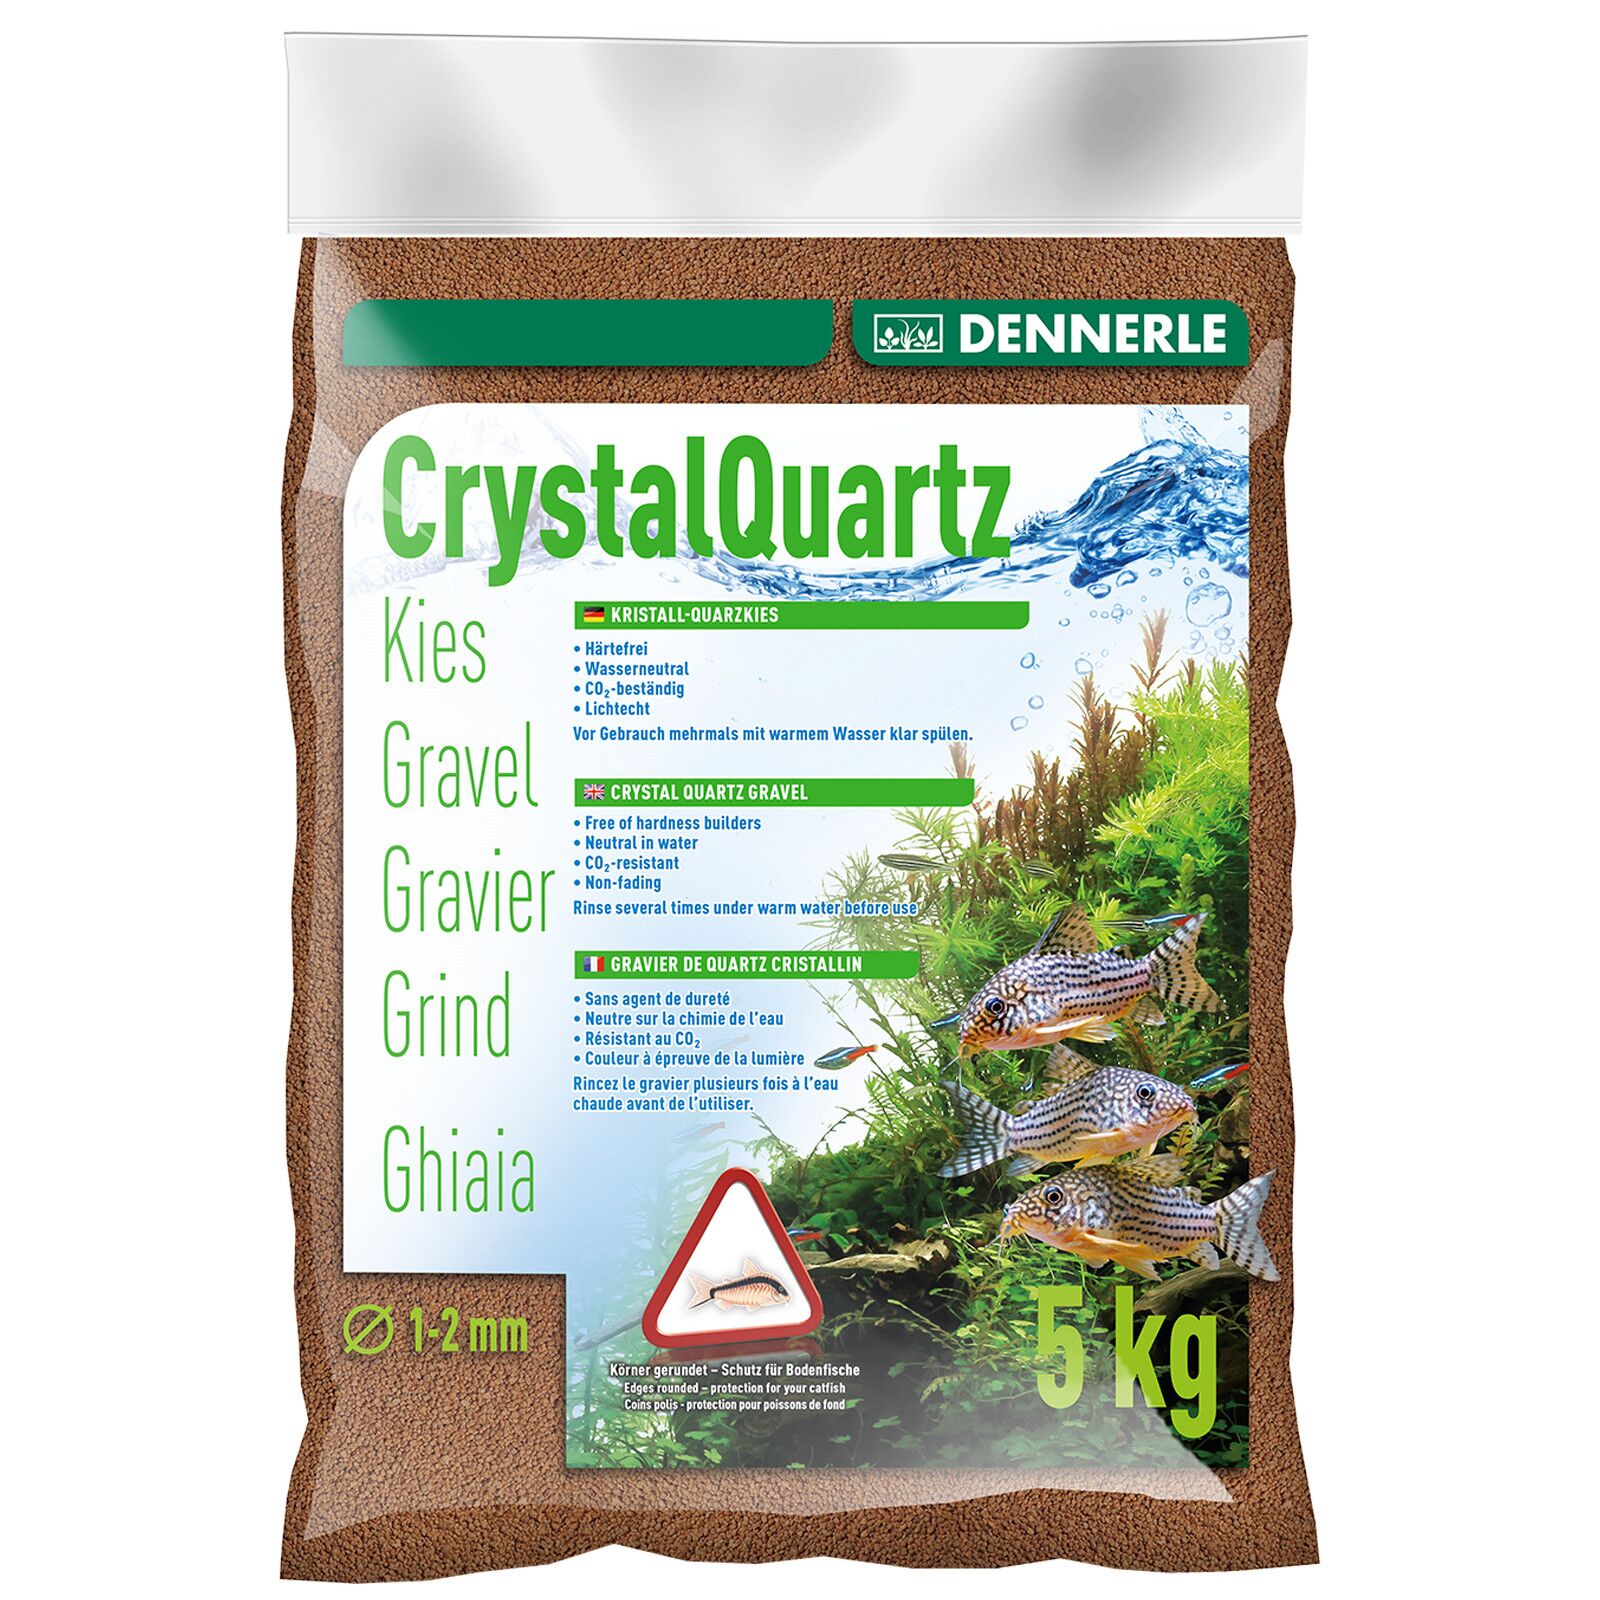 Dennerle - Crystal Quartz Gravel - Roe brown